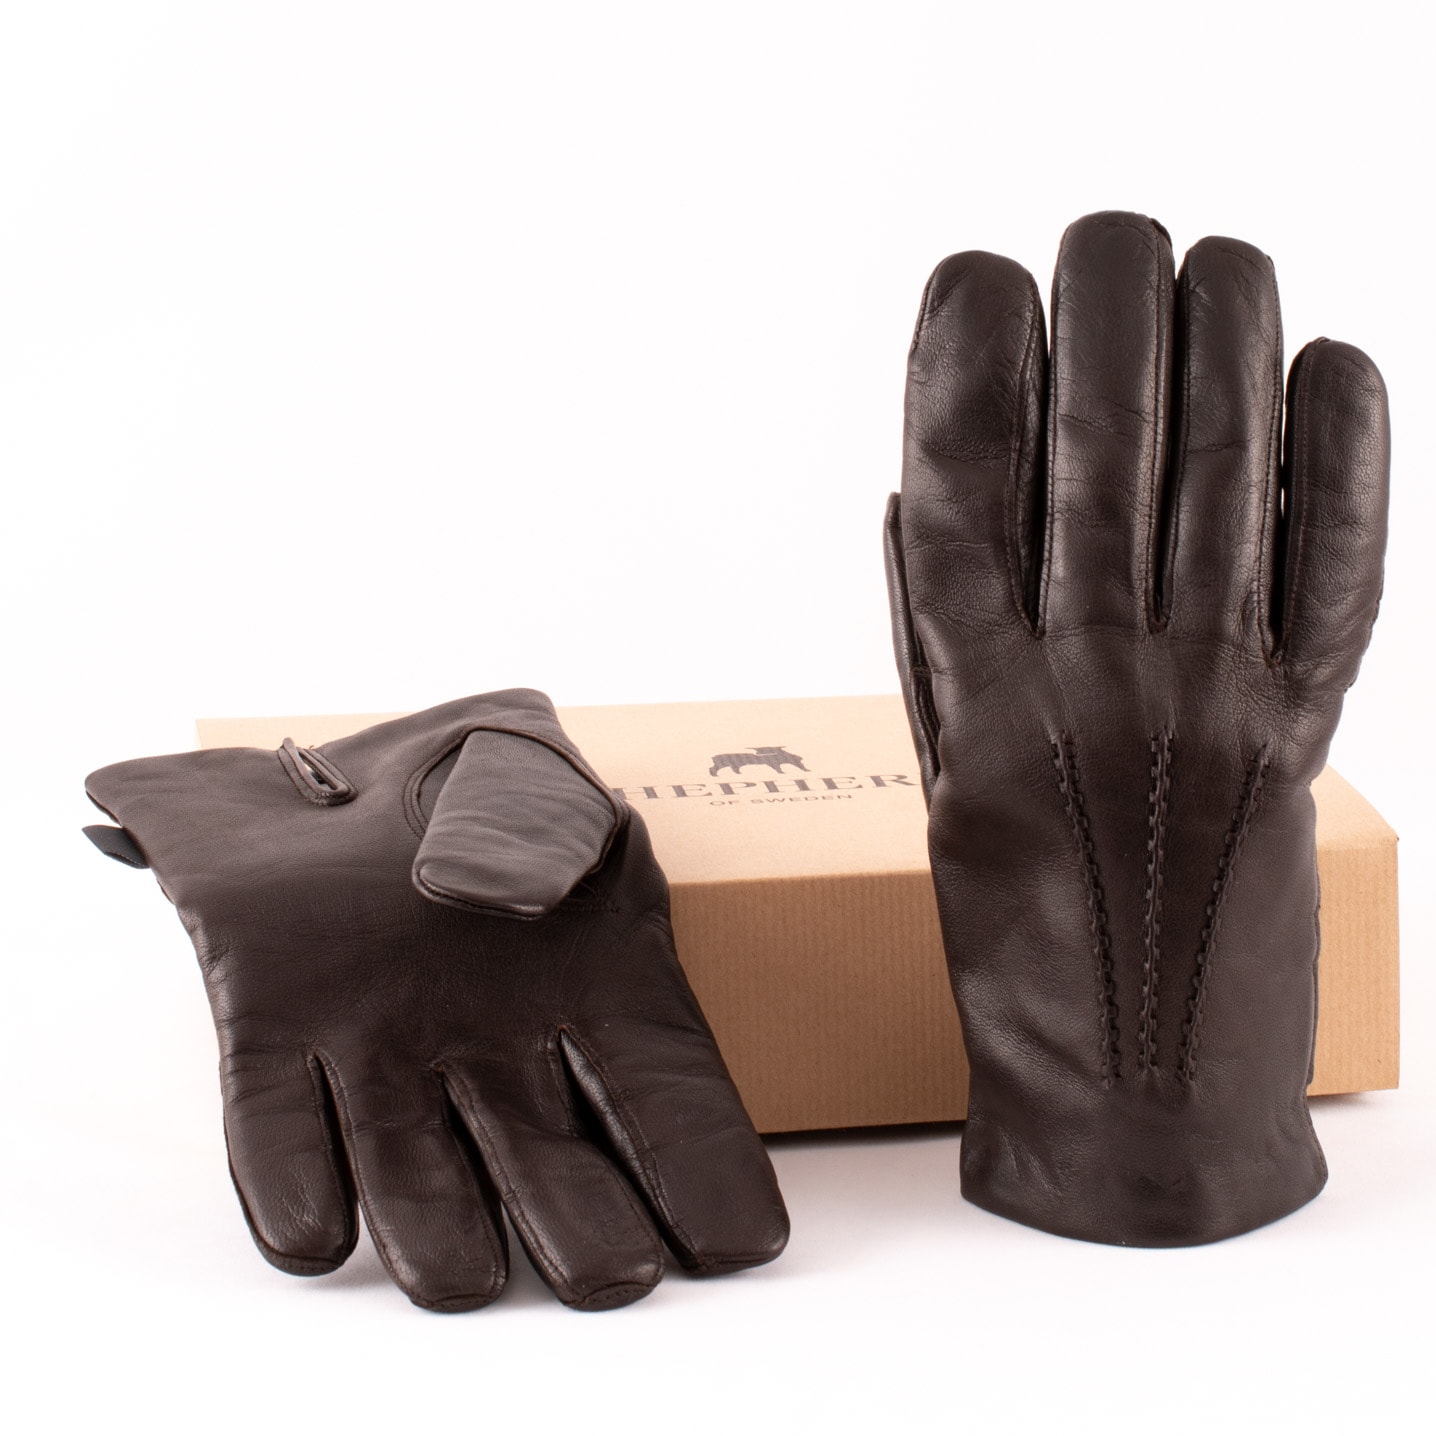 William gloves